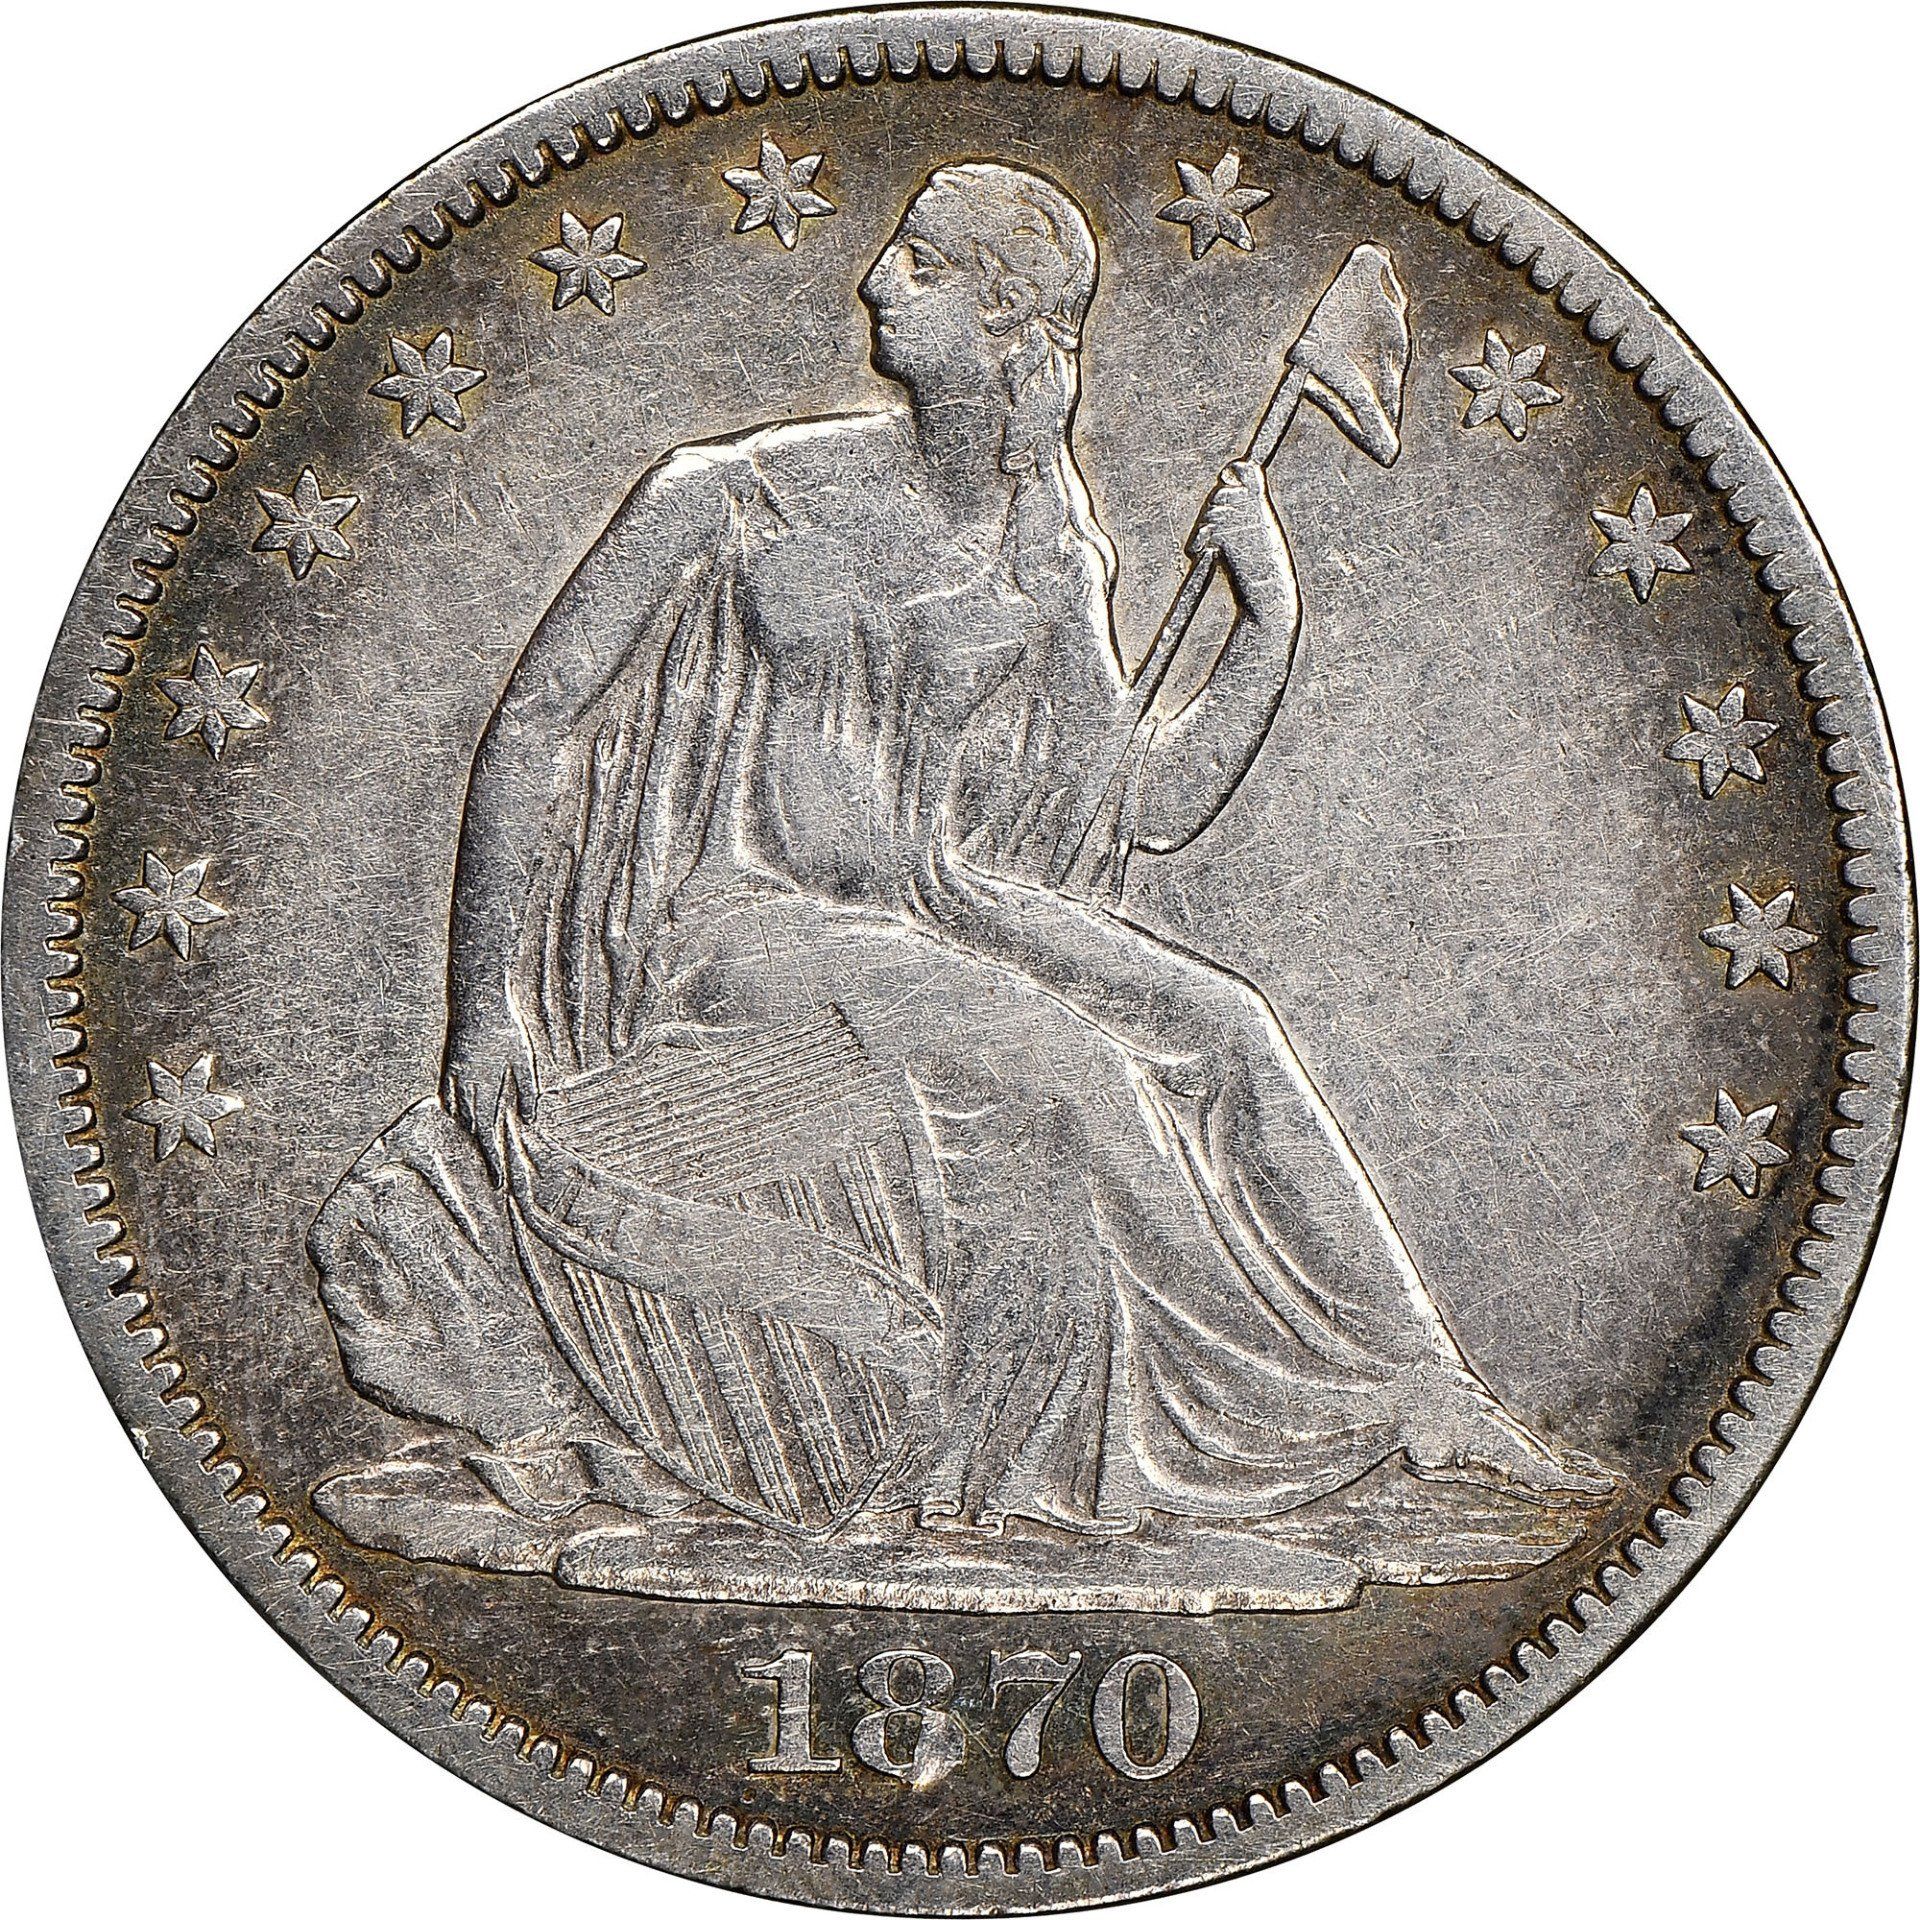 1870 CC Seated Liberty Half Dollar image courtesy of NGC